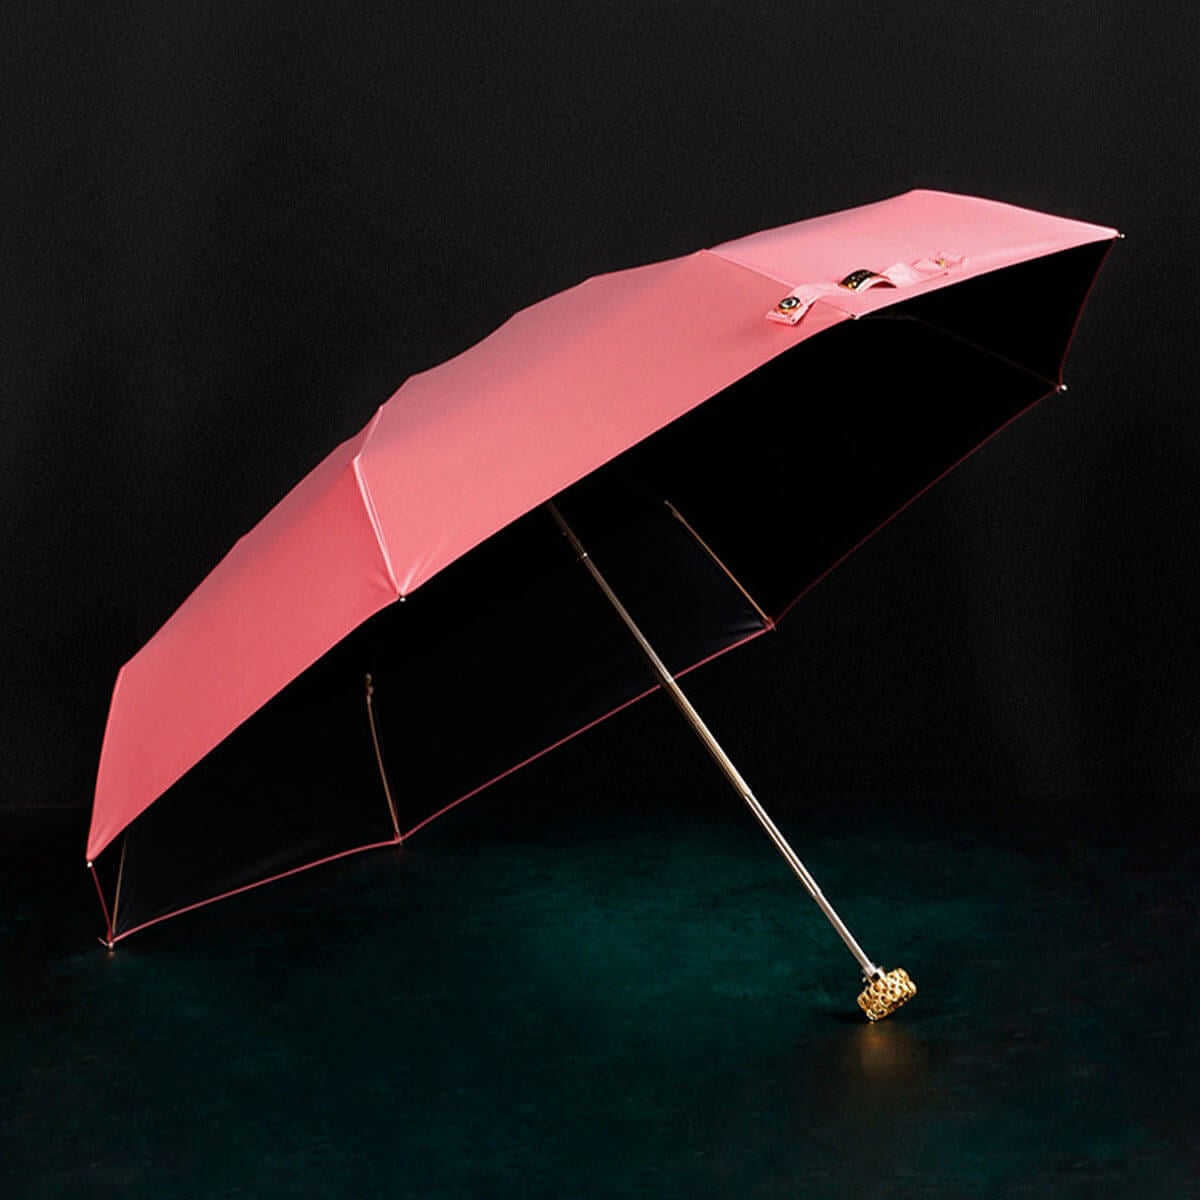 The Top Grade Luxury Five Folding Portable Umbrella